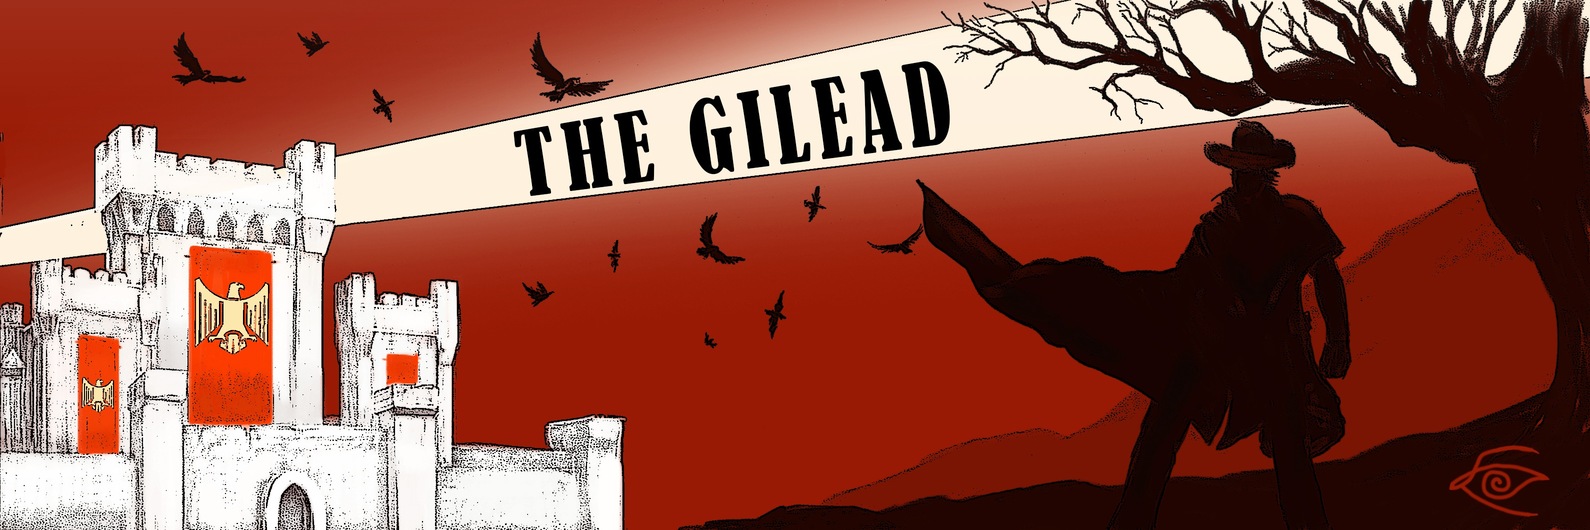 THE GILEAD